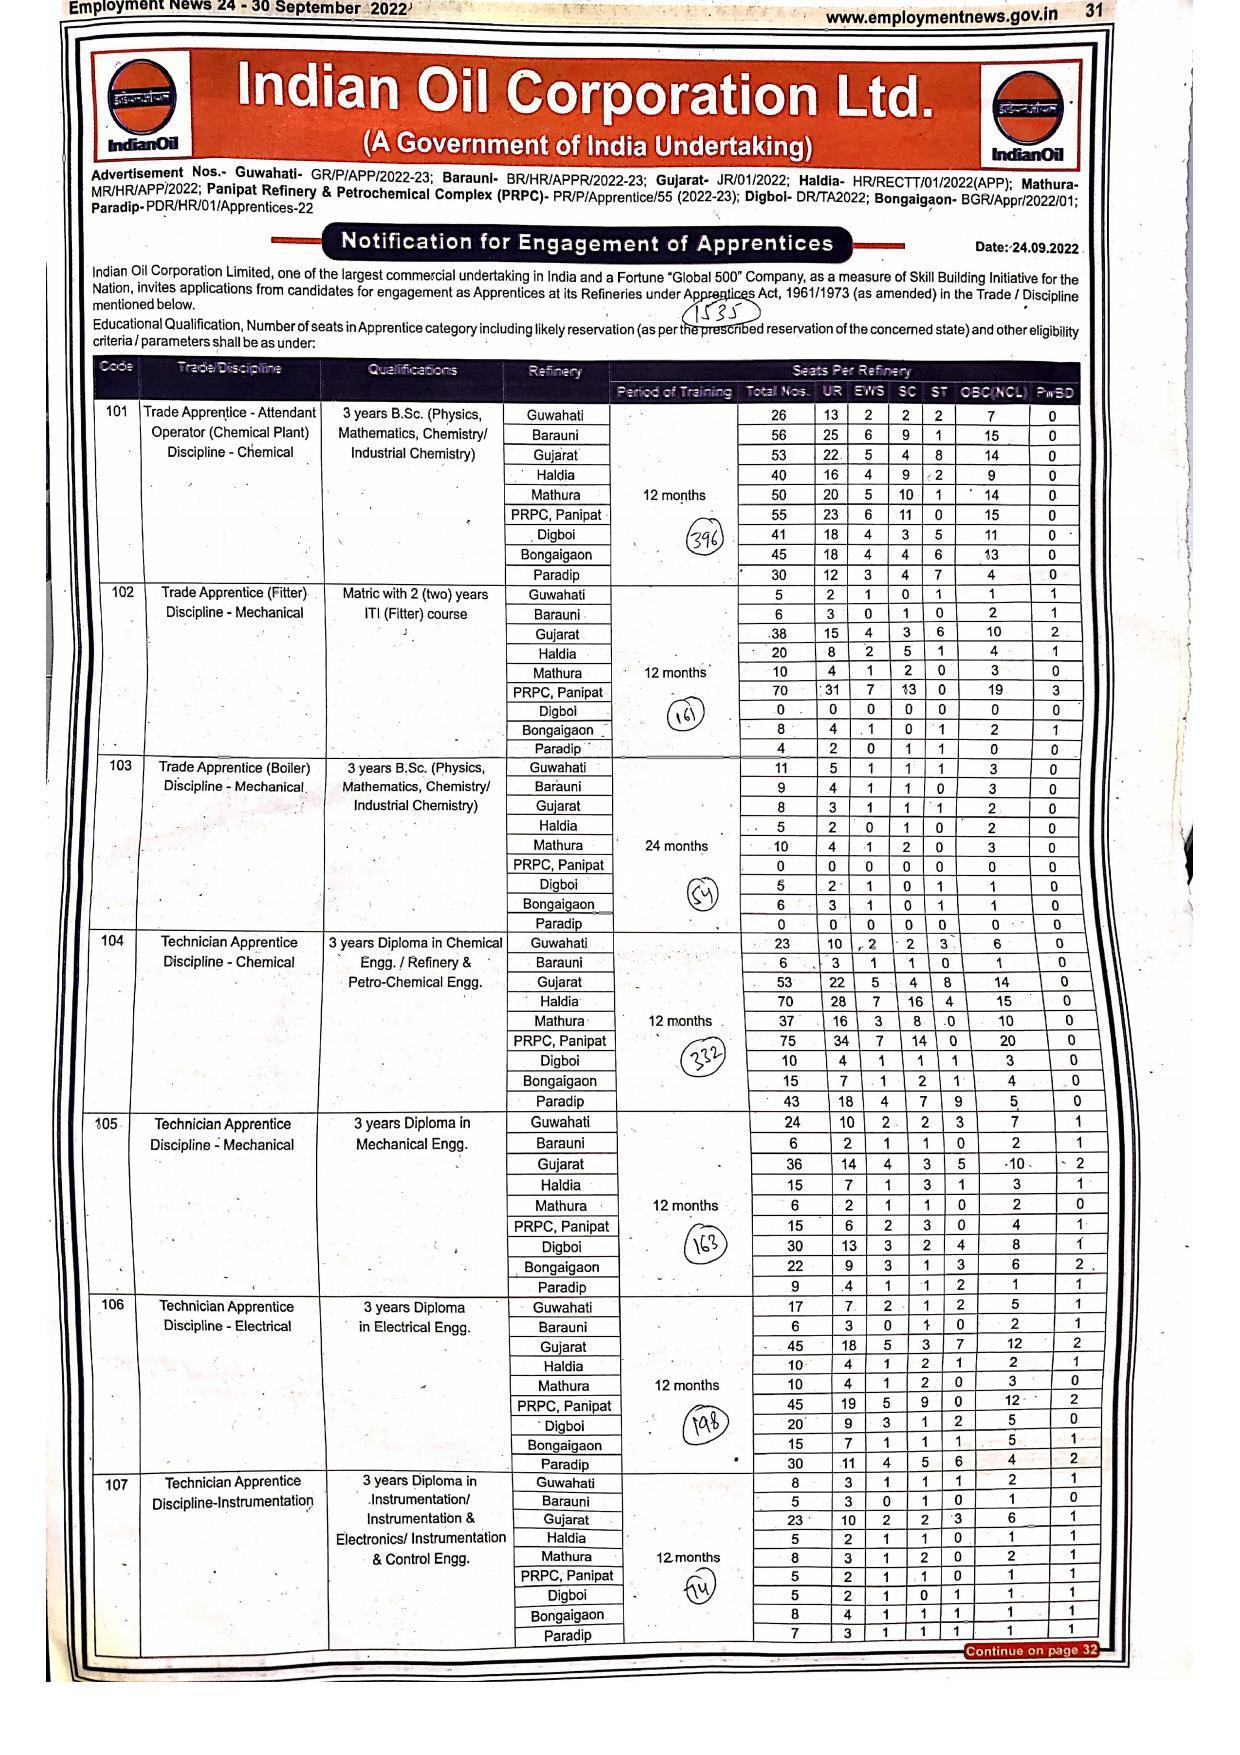 Indian Oil Corporation (IOCL) Apprentice Recruitment 2022 - Page 3